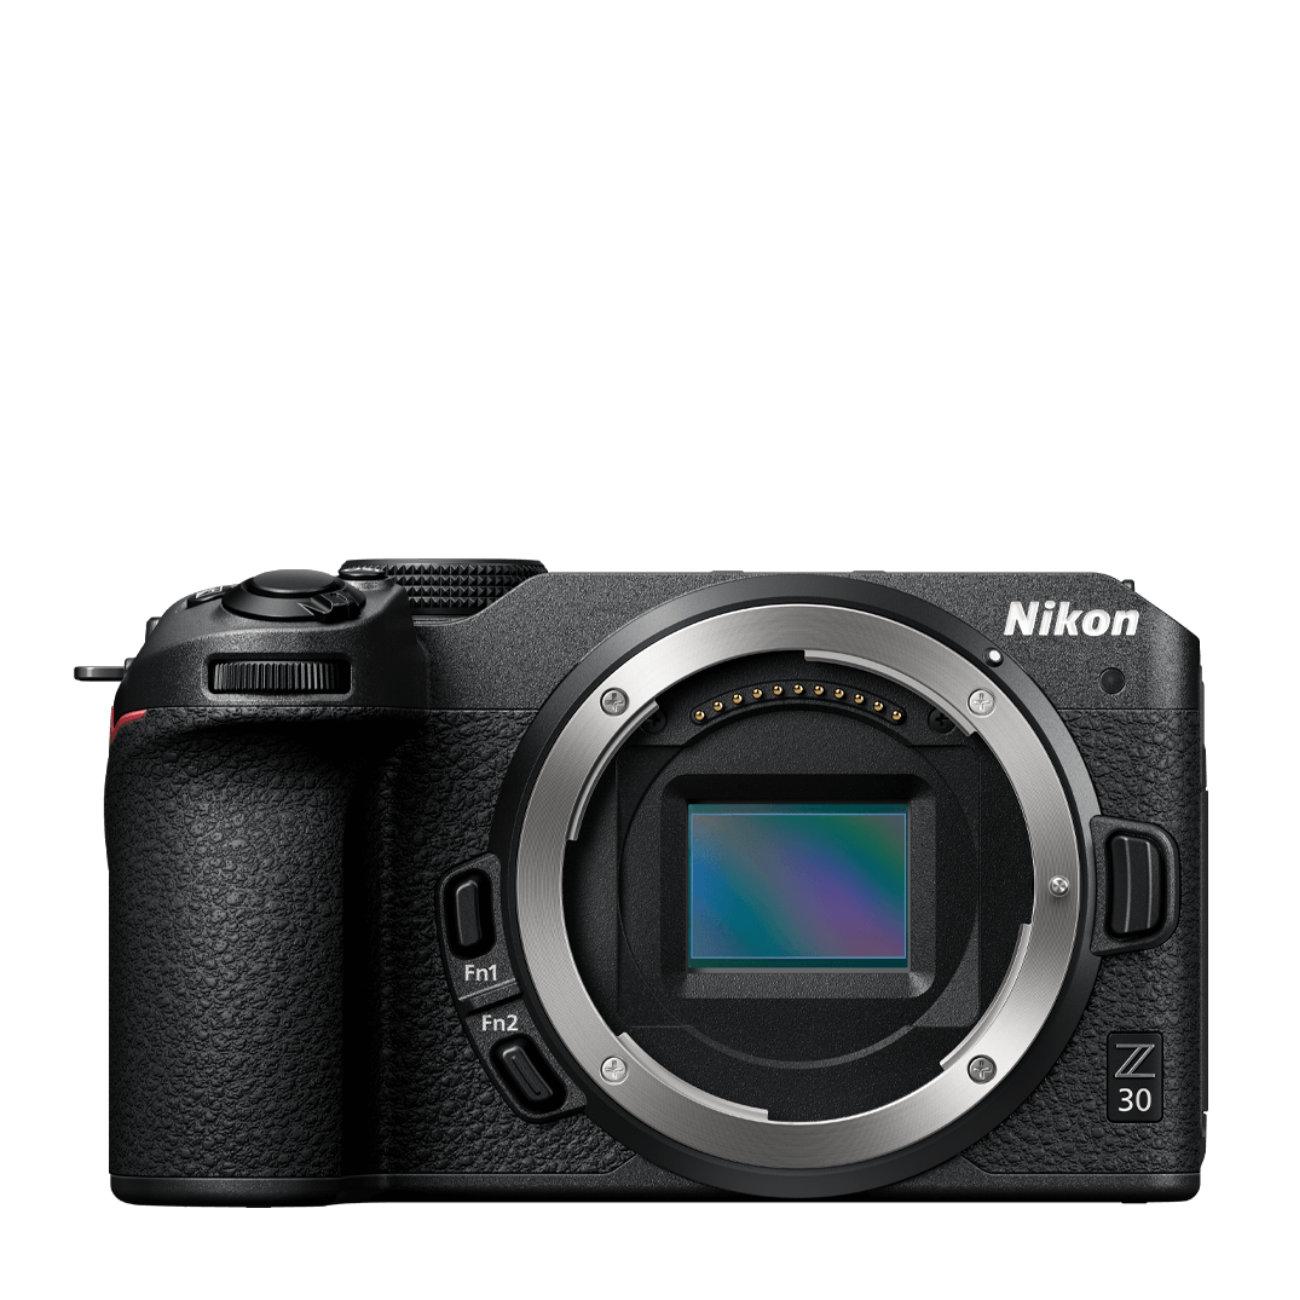 Nikon Z 30 + DX 12-28mm 3.5-5.6 PZ VR